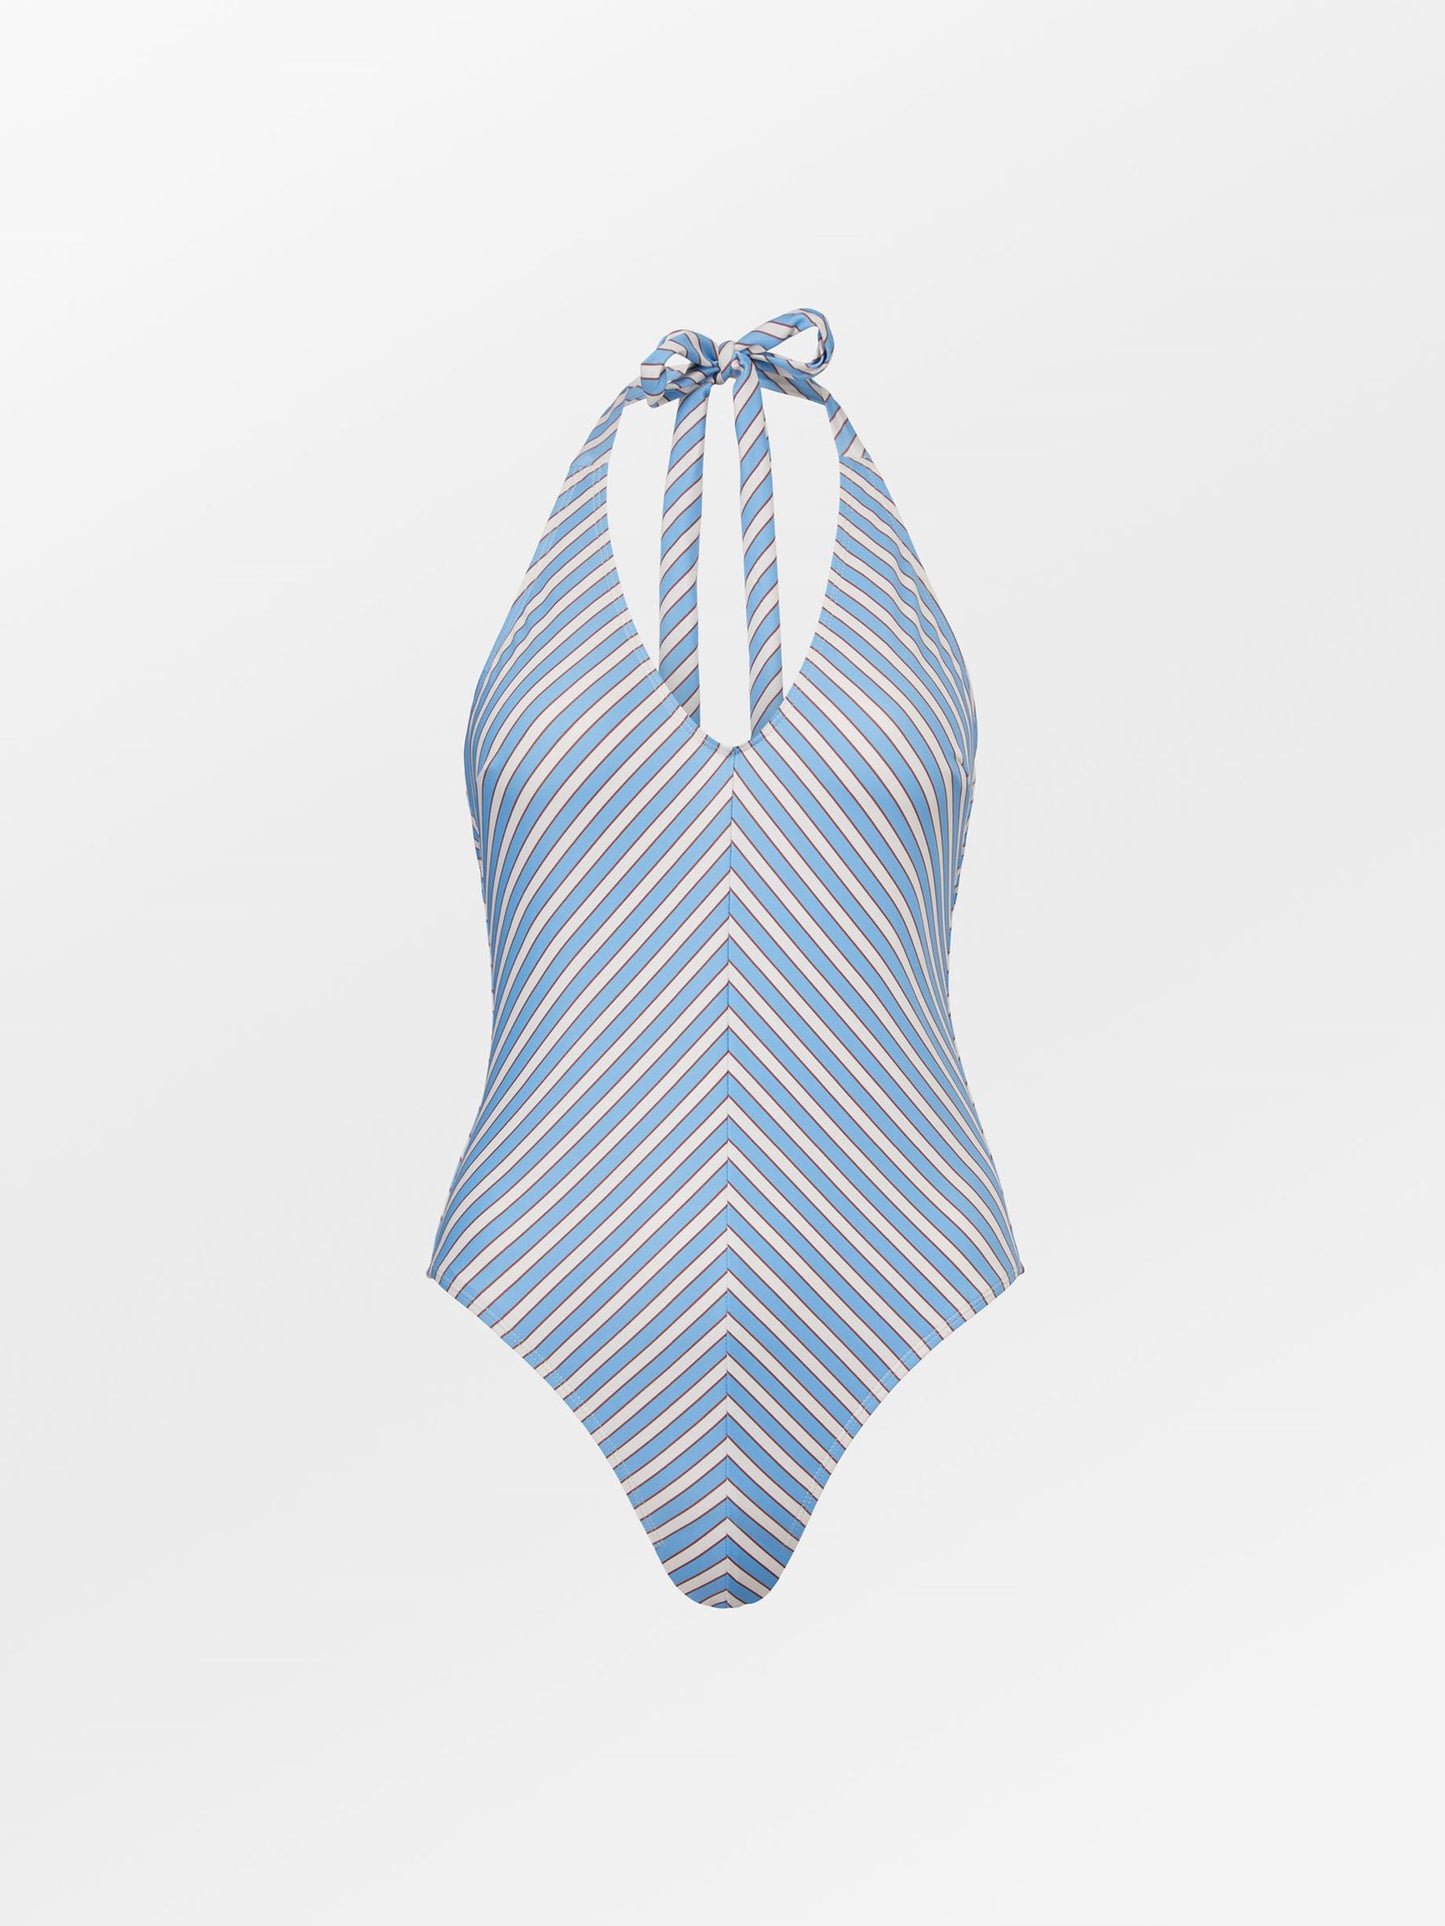 Becksöndergaard, Aloha Halterneck Swimsuit - Little Boy Blue, archive, archive, sale, sale